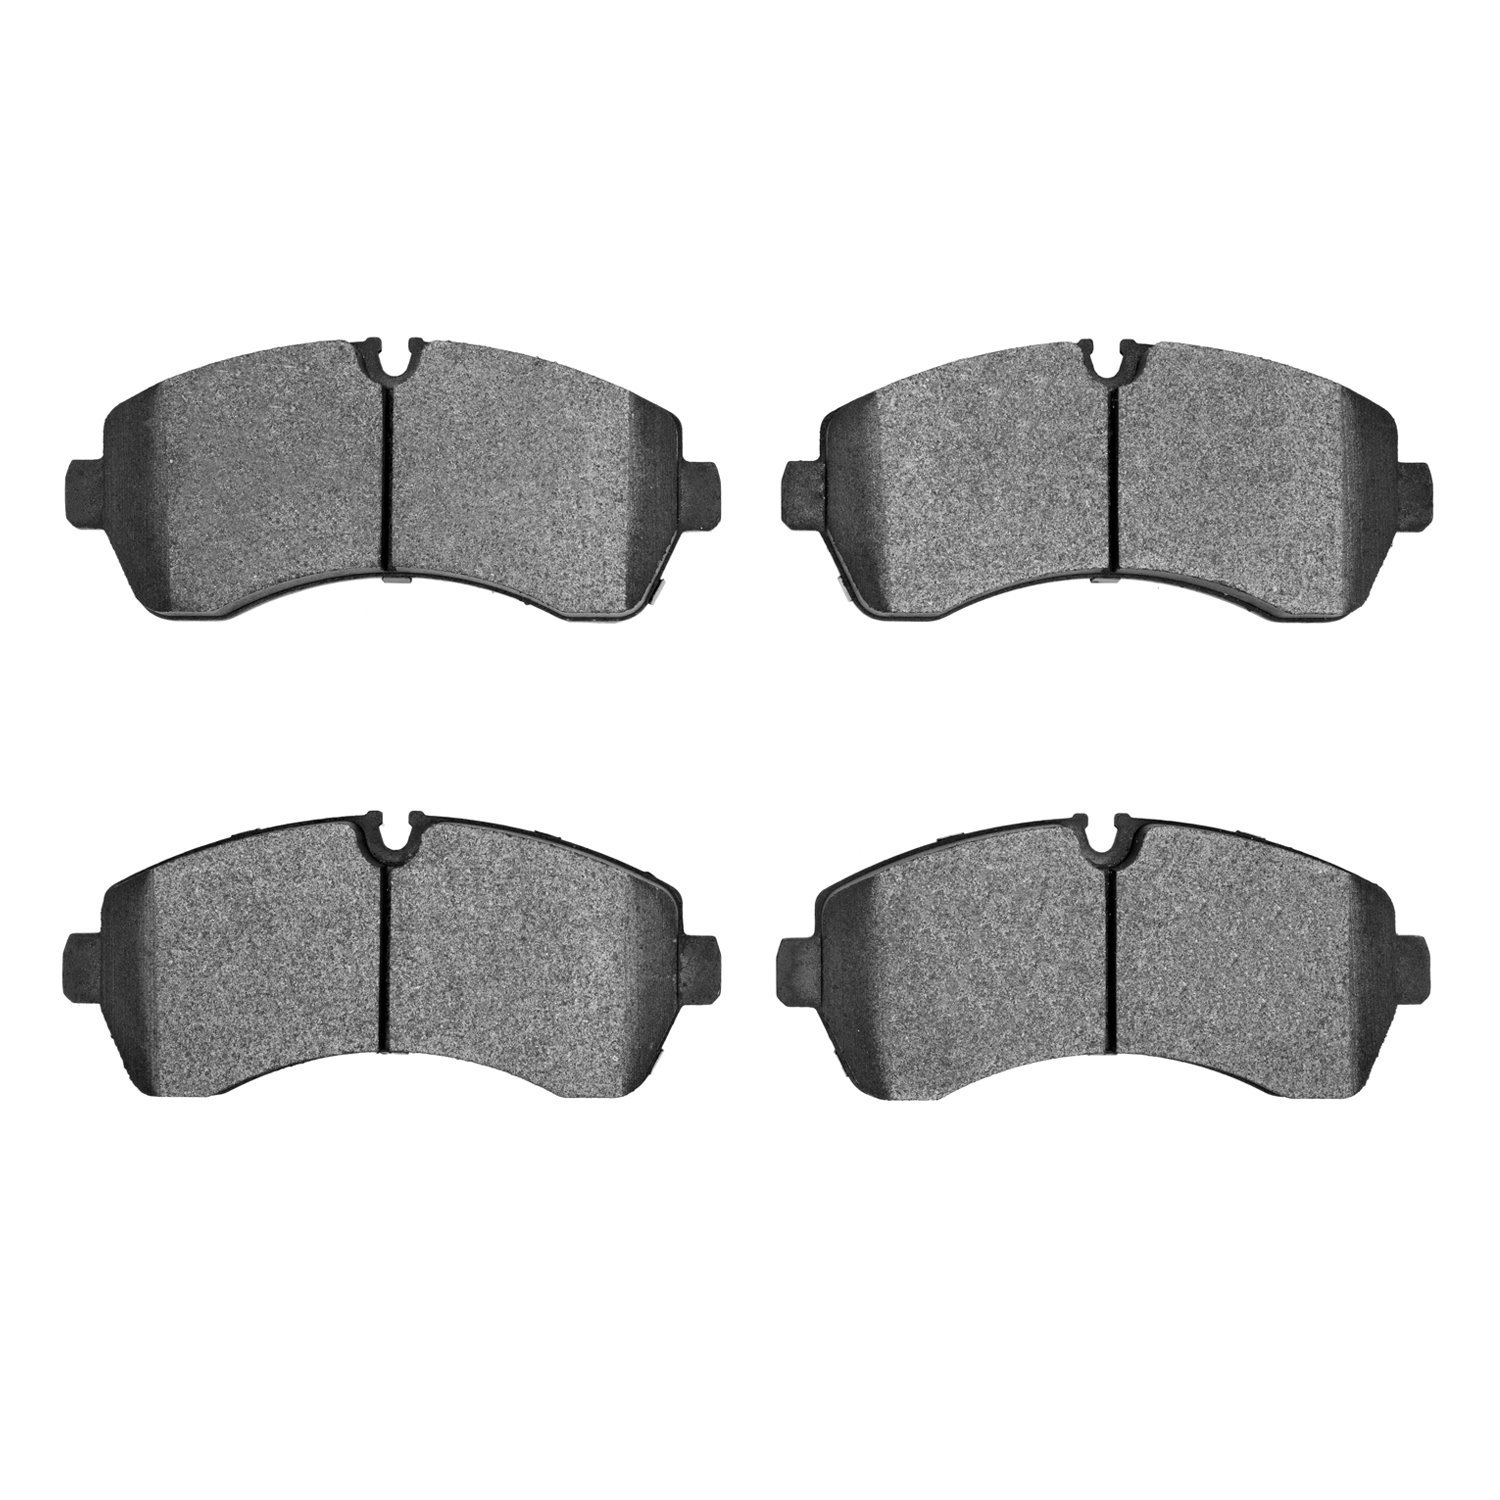 1311-1268-00 3000-Series Semi-Metallic Brake Pads, Fits Select Multiple Makes/Models, Position: Front,Fr,Rr